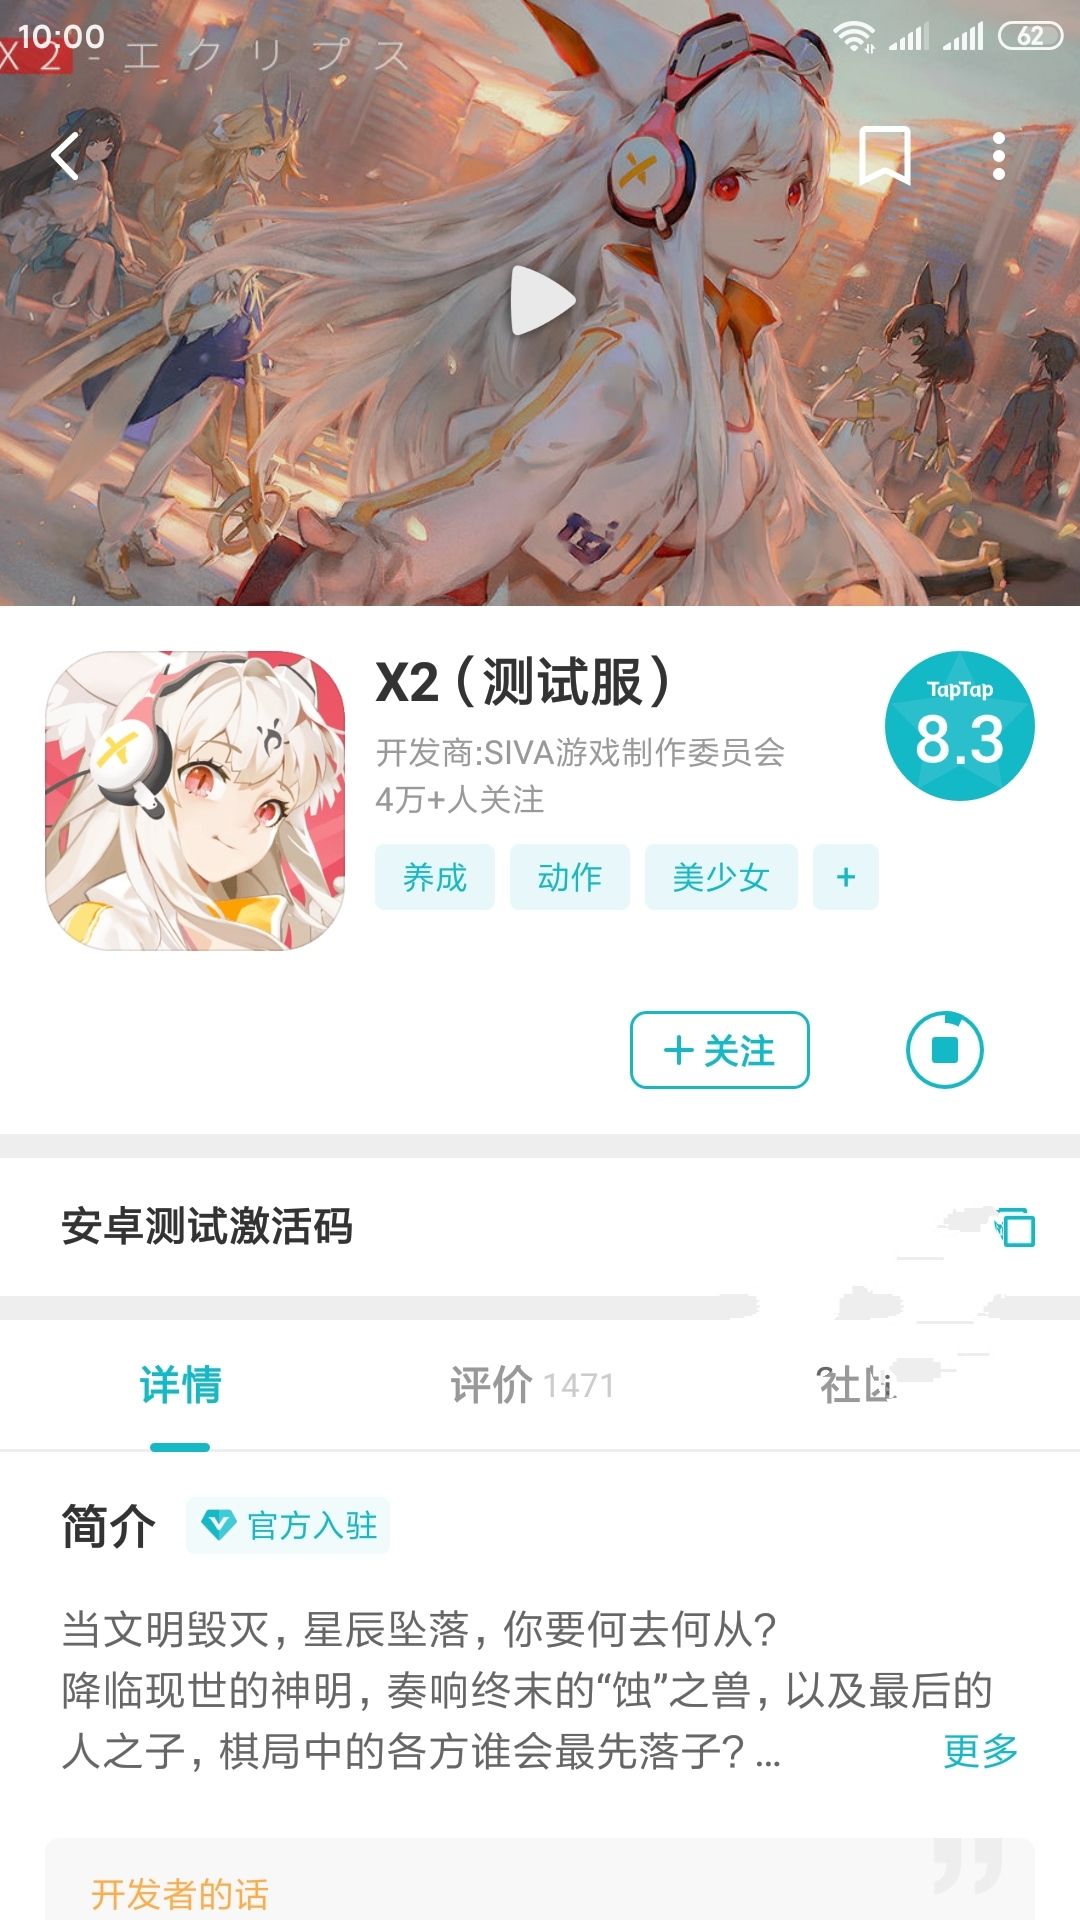 X2手游愚人船测试激活码分享 最新激活码大全